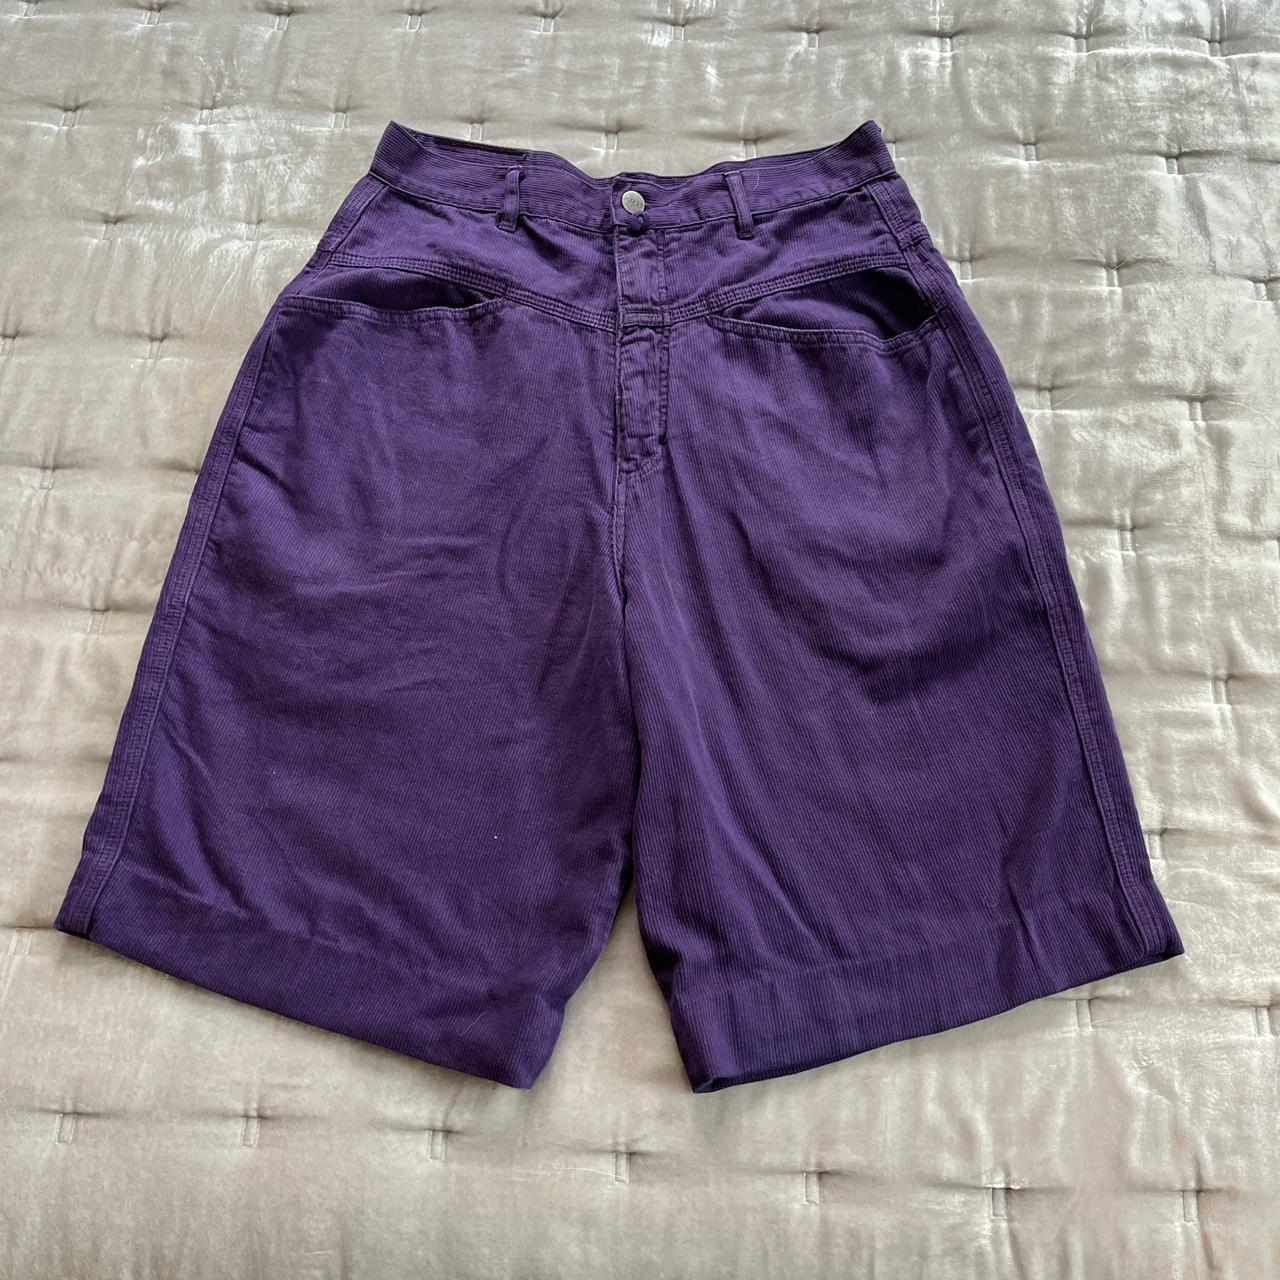 Marithe’ & Francois Girbaud purple shorts. Looks... - Depop